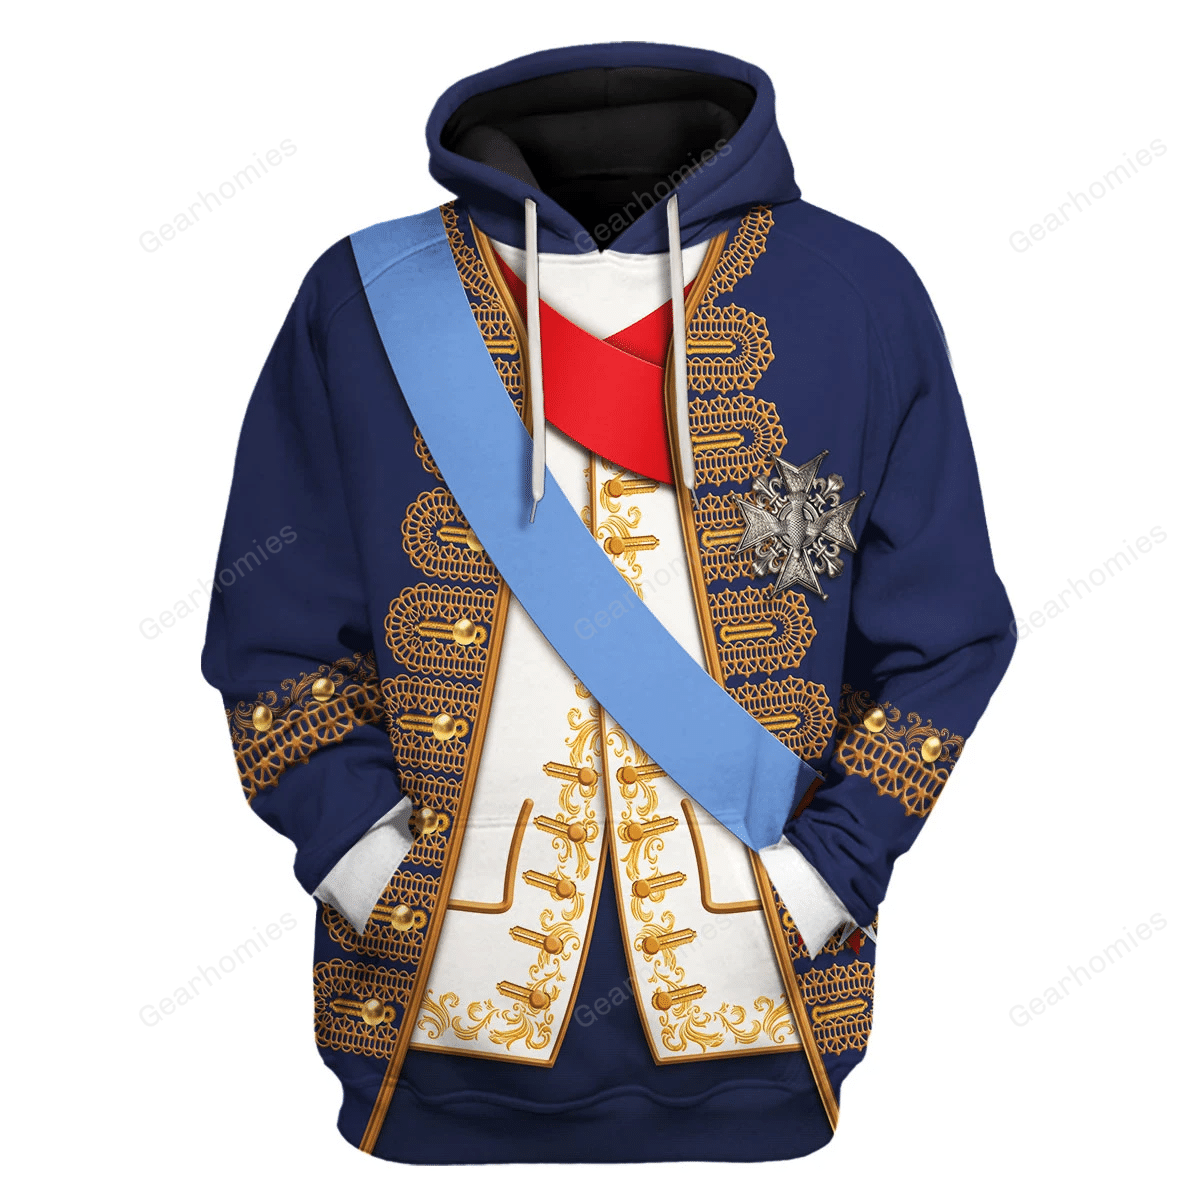 Louis XV of France Historical Hoodies Pullover Sweatshirt Tracksuit